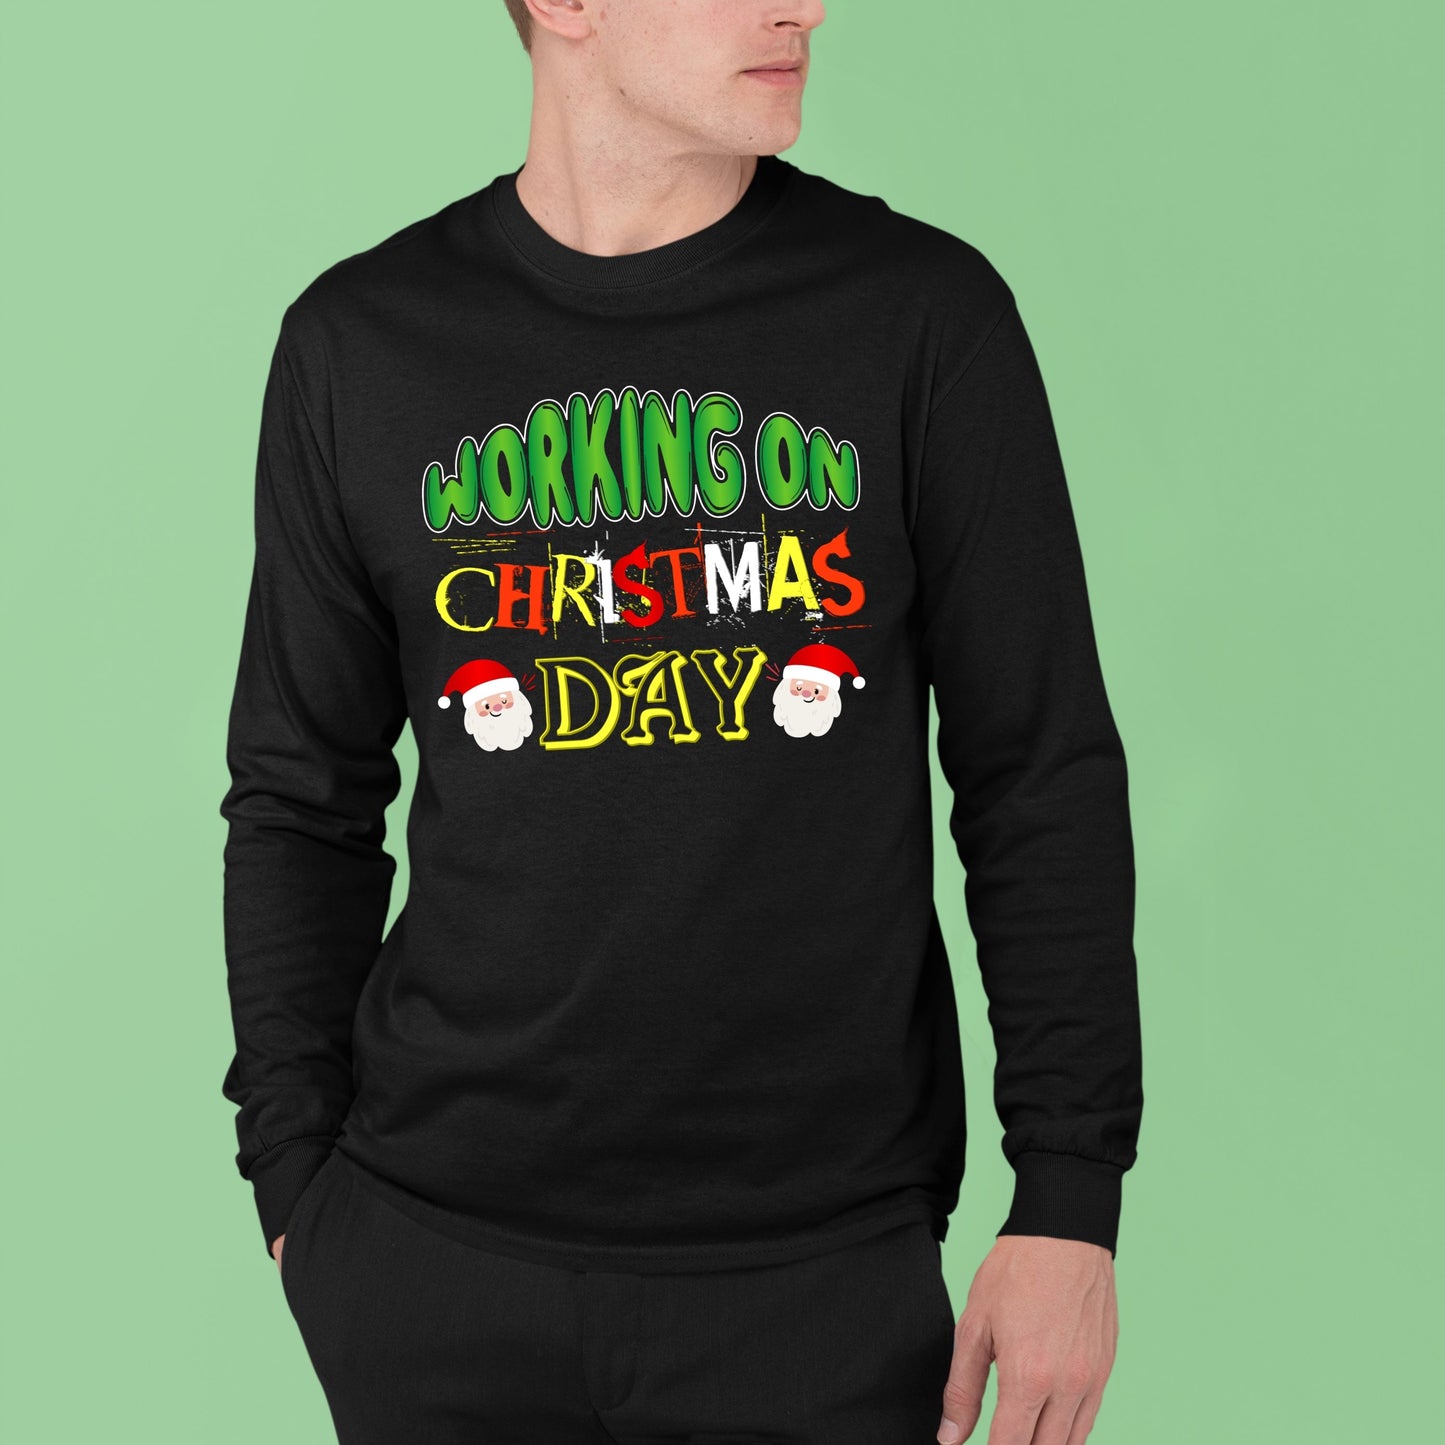 Working on Chirstmas day , Christmas Long Sleeves, Christmas Sweater, Christmas Crewneck For Men, Christmas Present, Christmas Sweatshirt